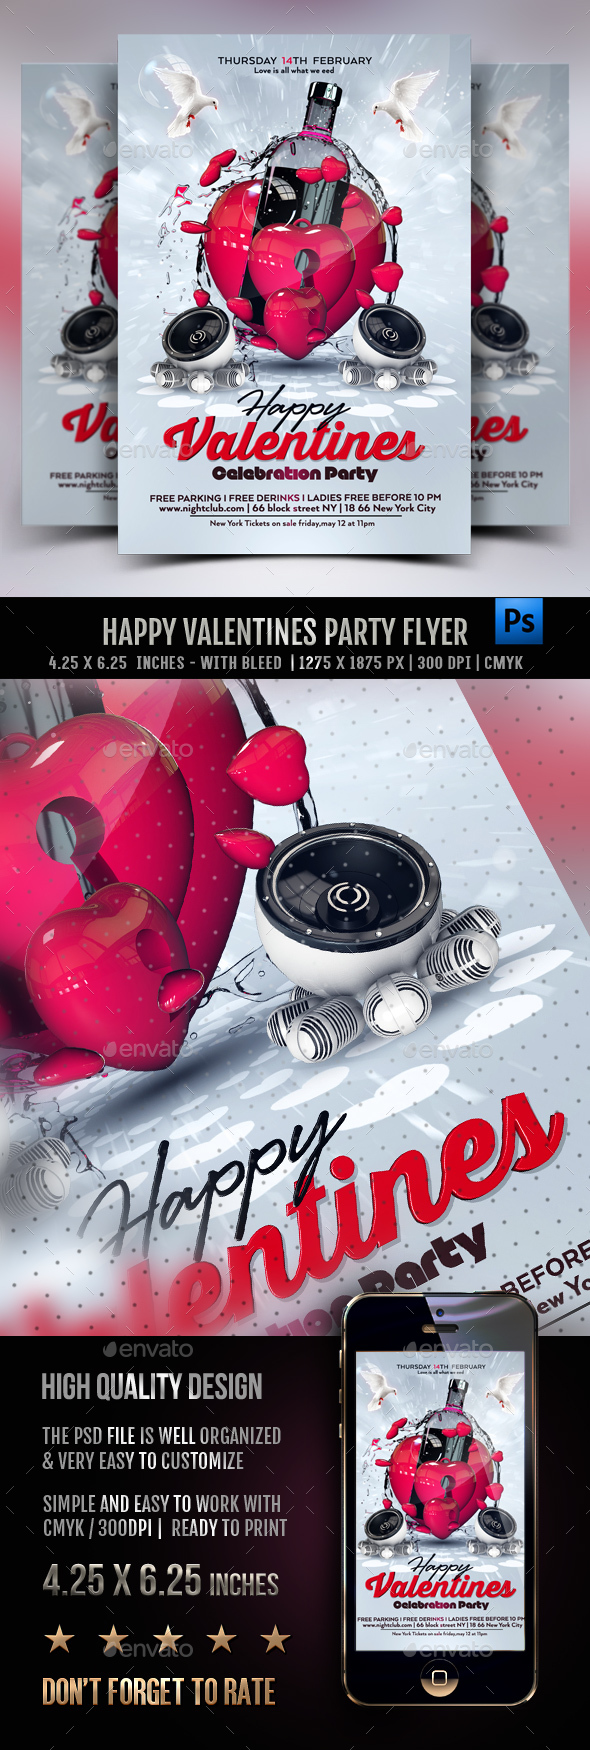 Happy Valentines Party Flyer